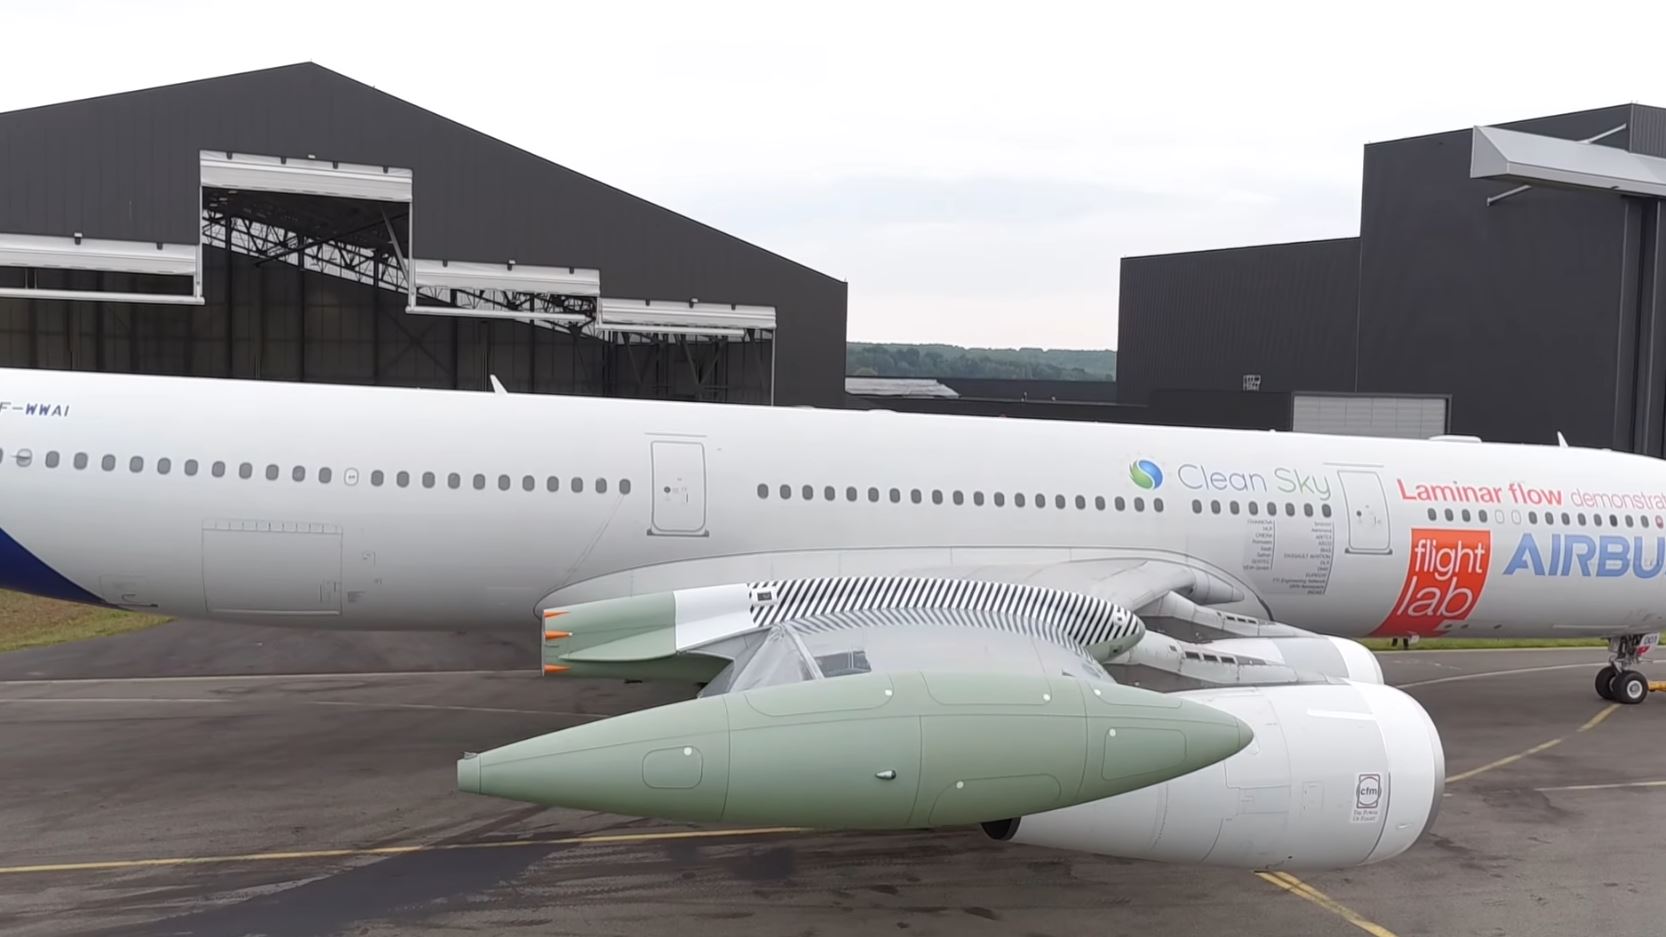 Airbus “Blade” Wingtip Makes First Flight